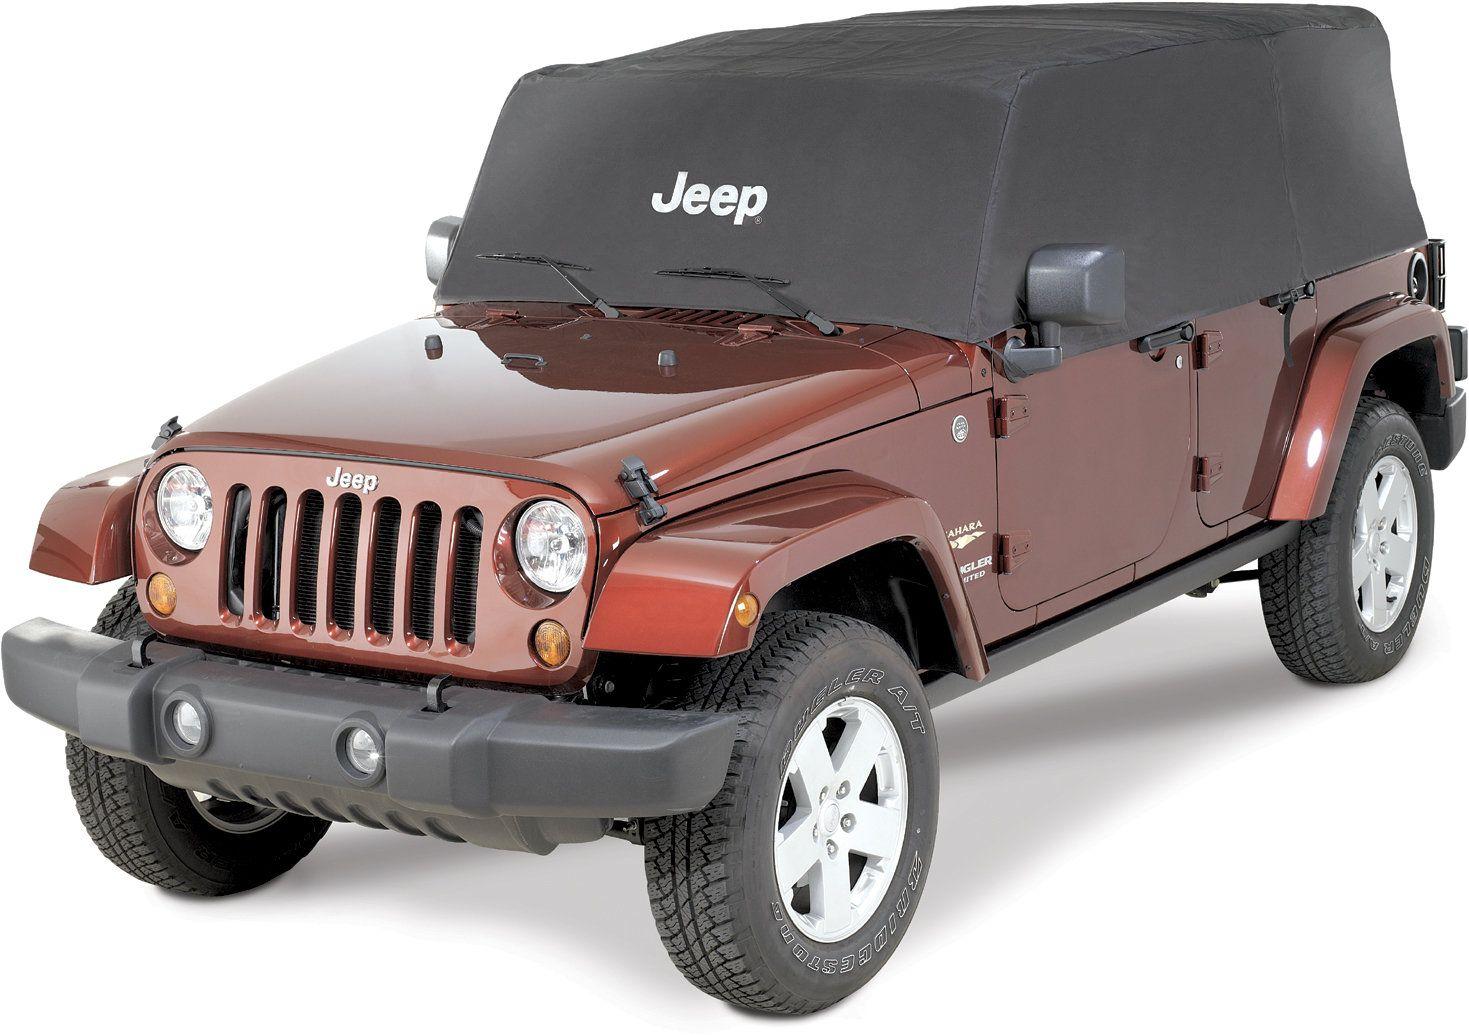 Jeep Unlimited Logo - Mopar Jeep Logo Cab Cover For 07 18 Jeep Wrangler Unlimited JK 4